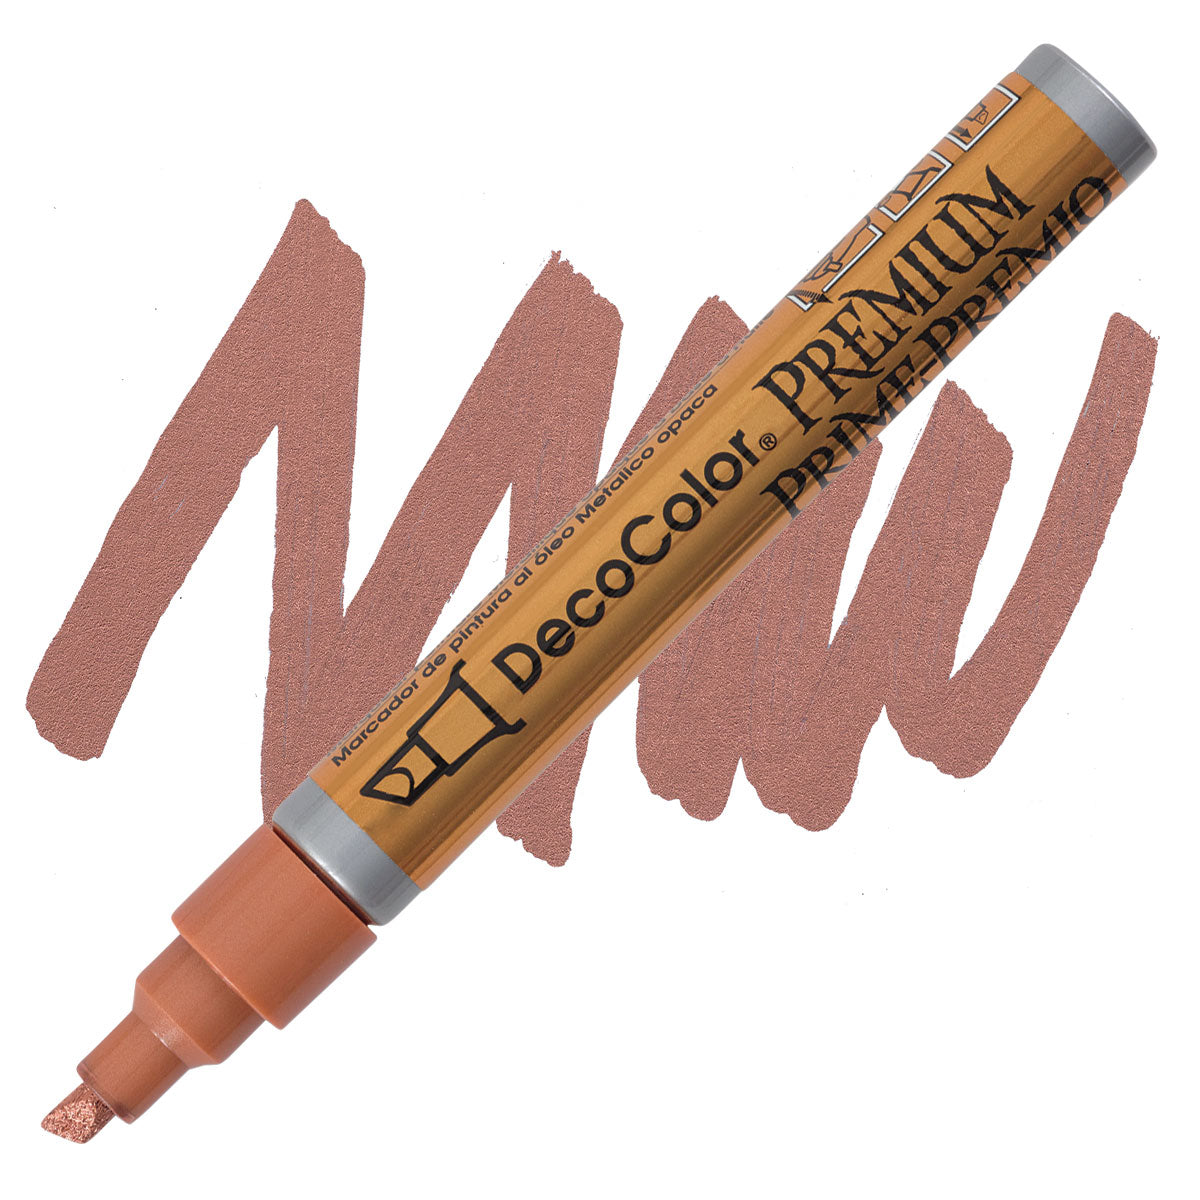 Decocolor Premium Paint Marker, Three-Way Chisel Tip